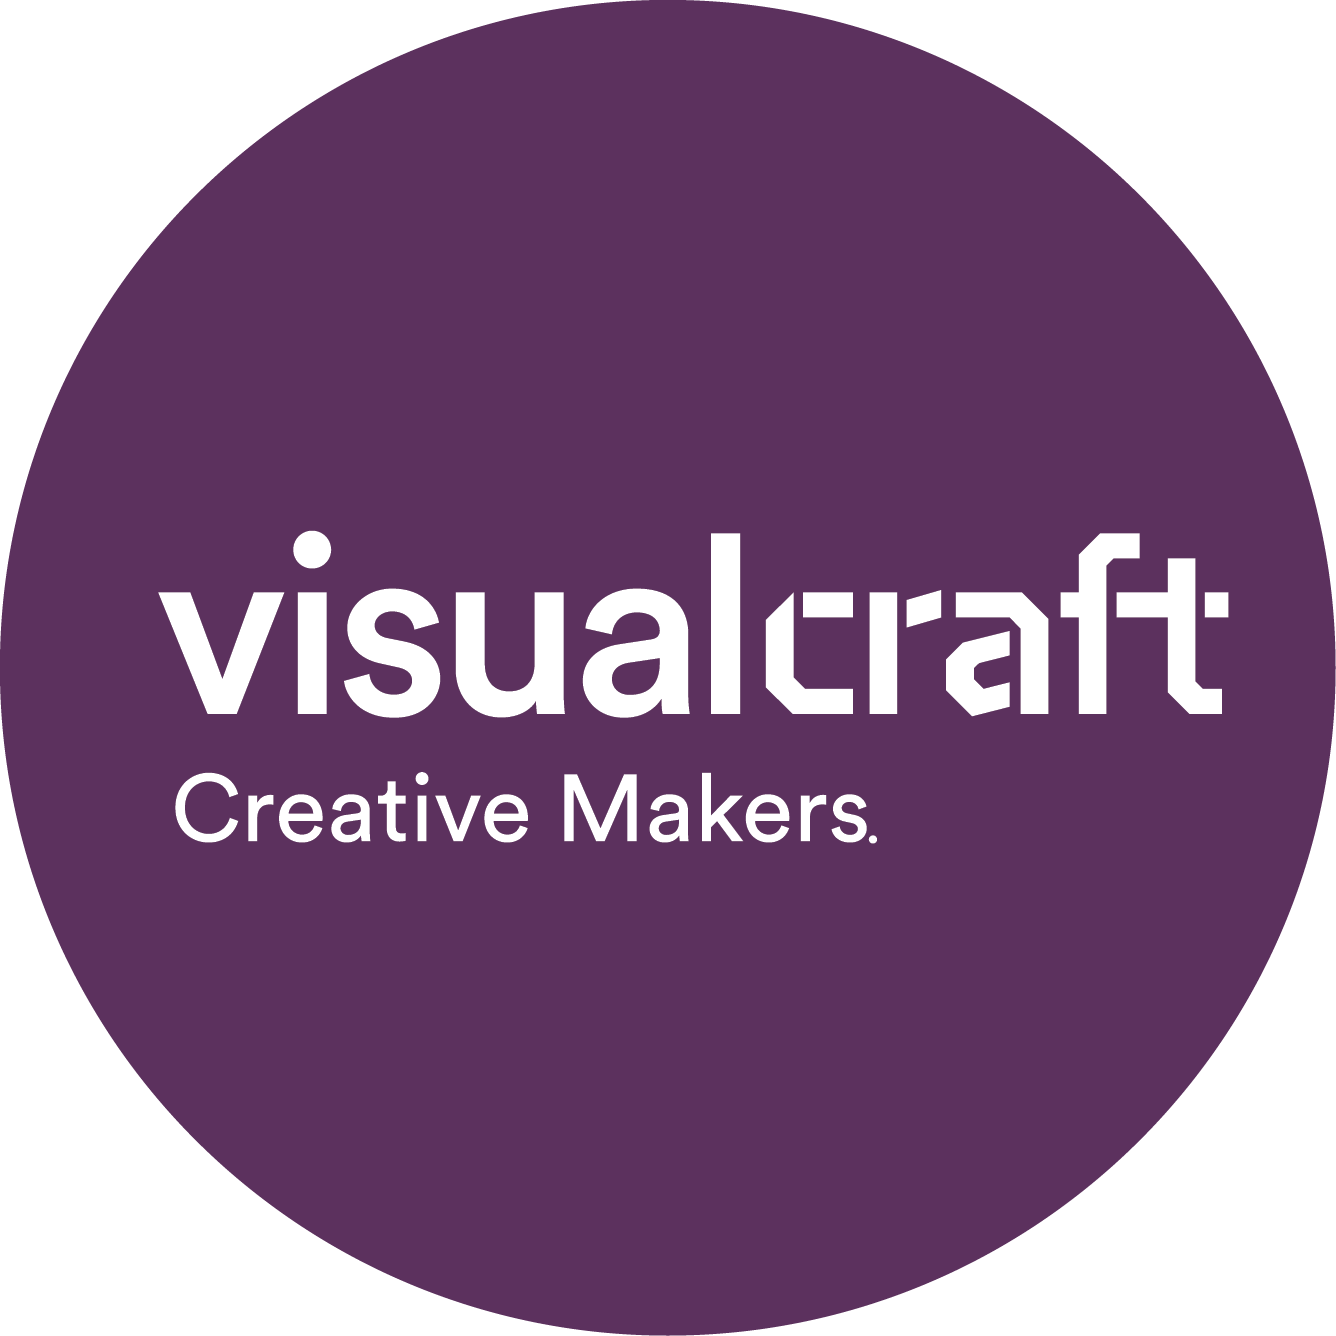 visualcraft Logo round